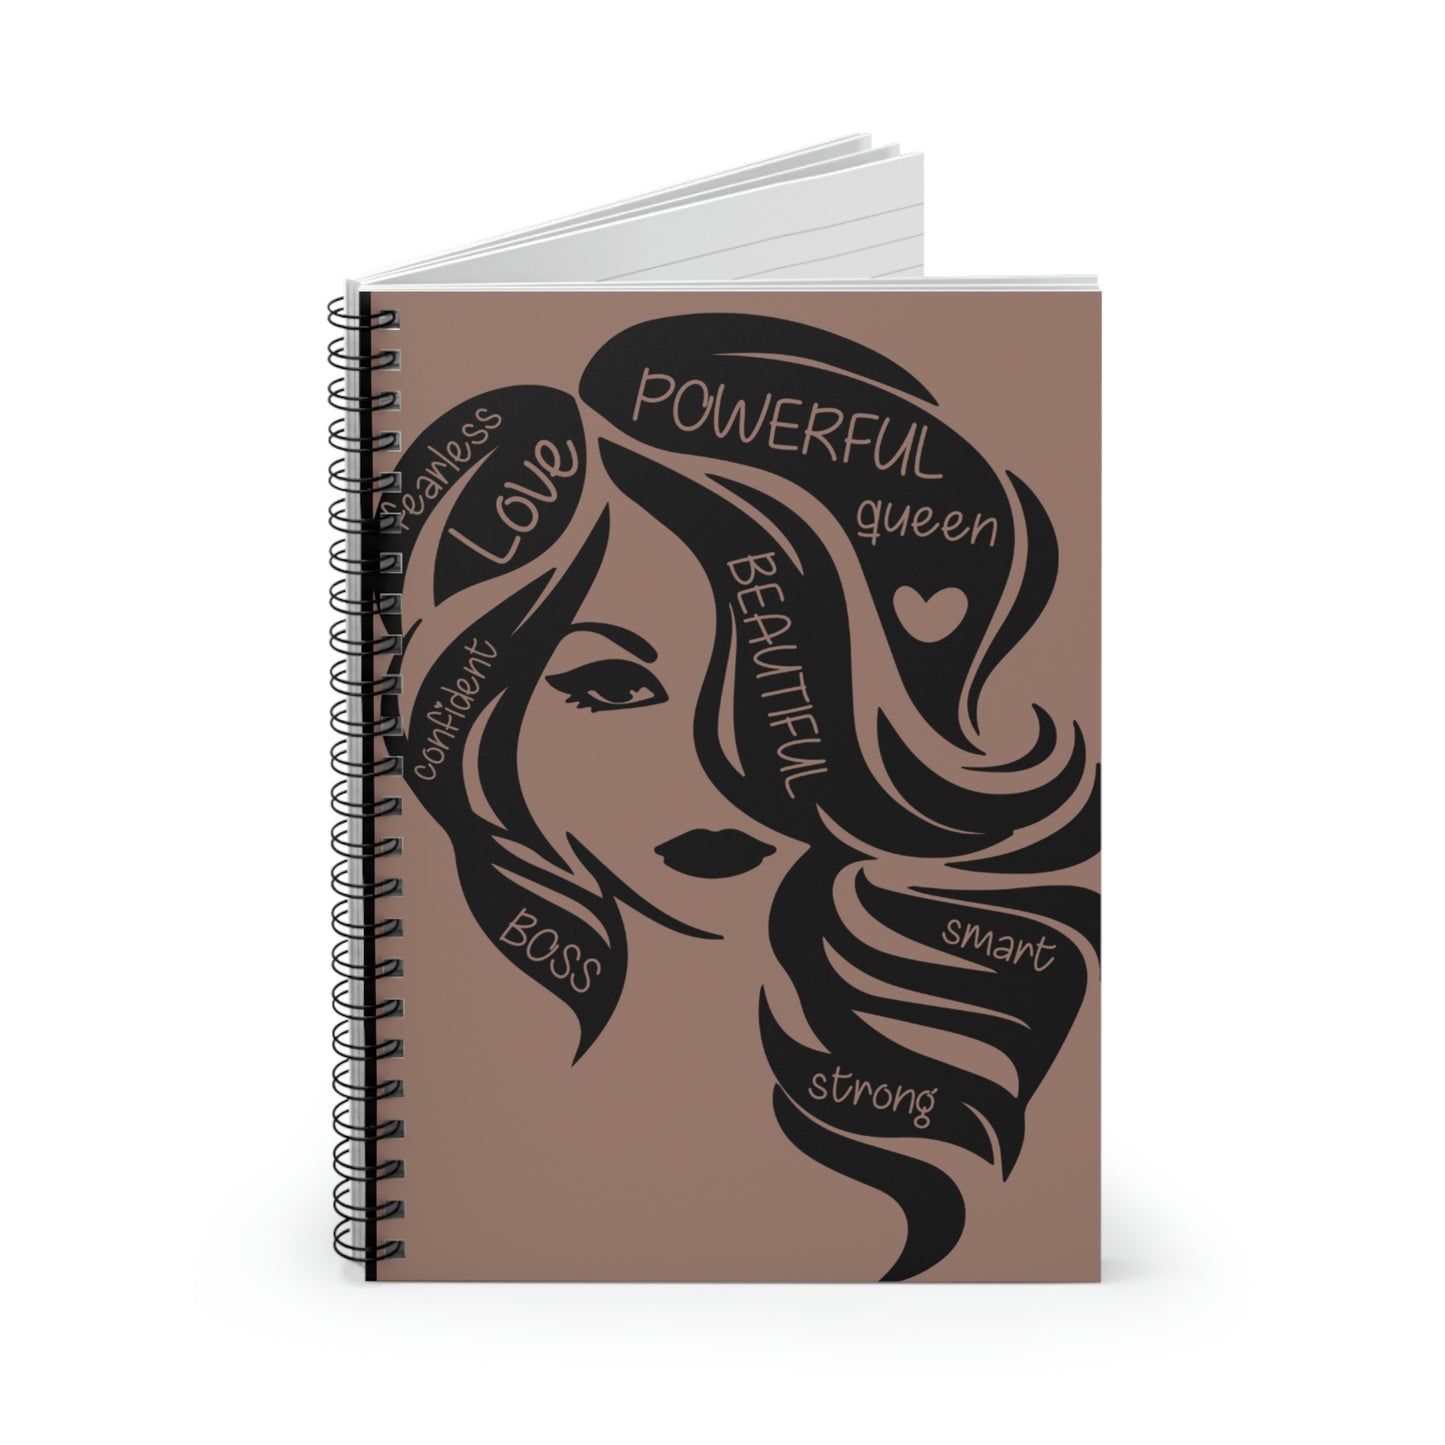 A self love journey notebook